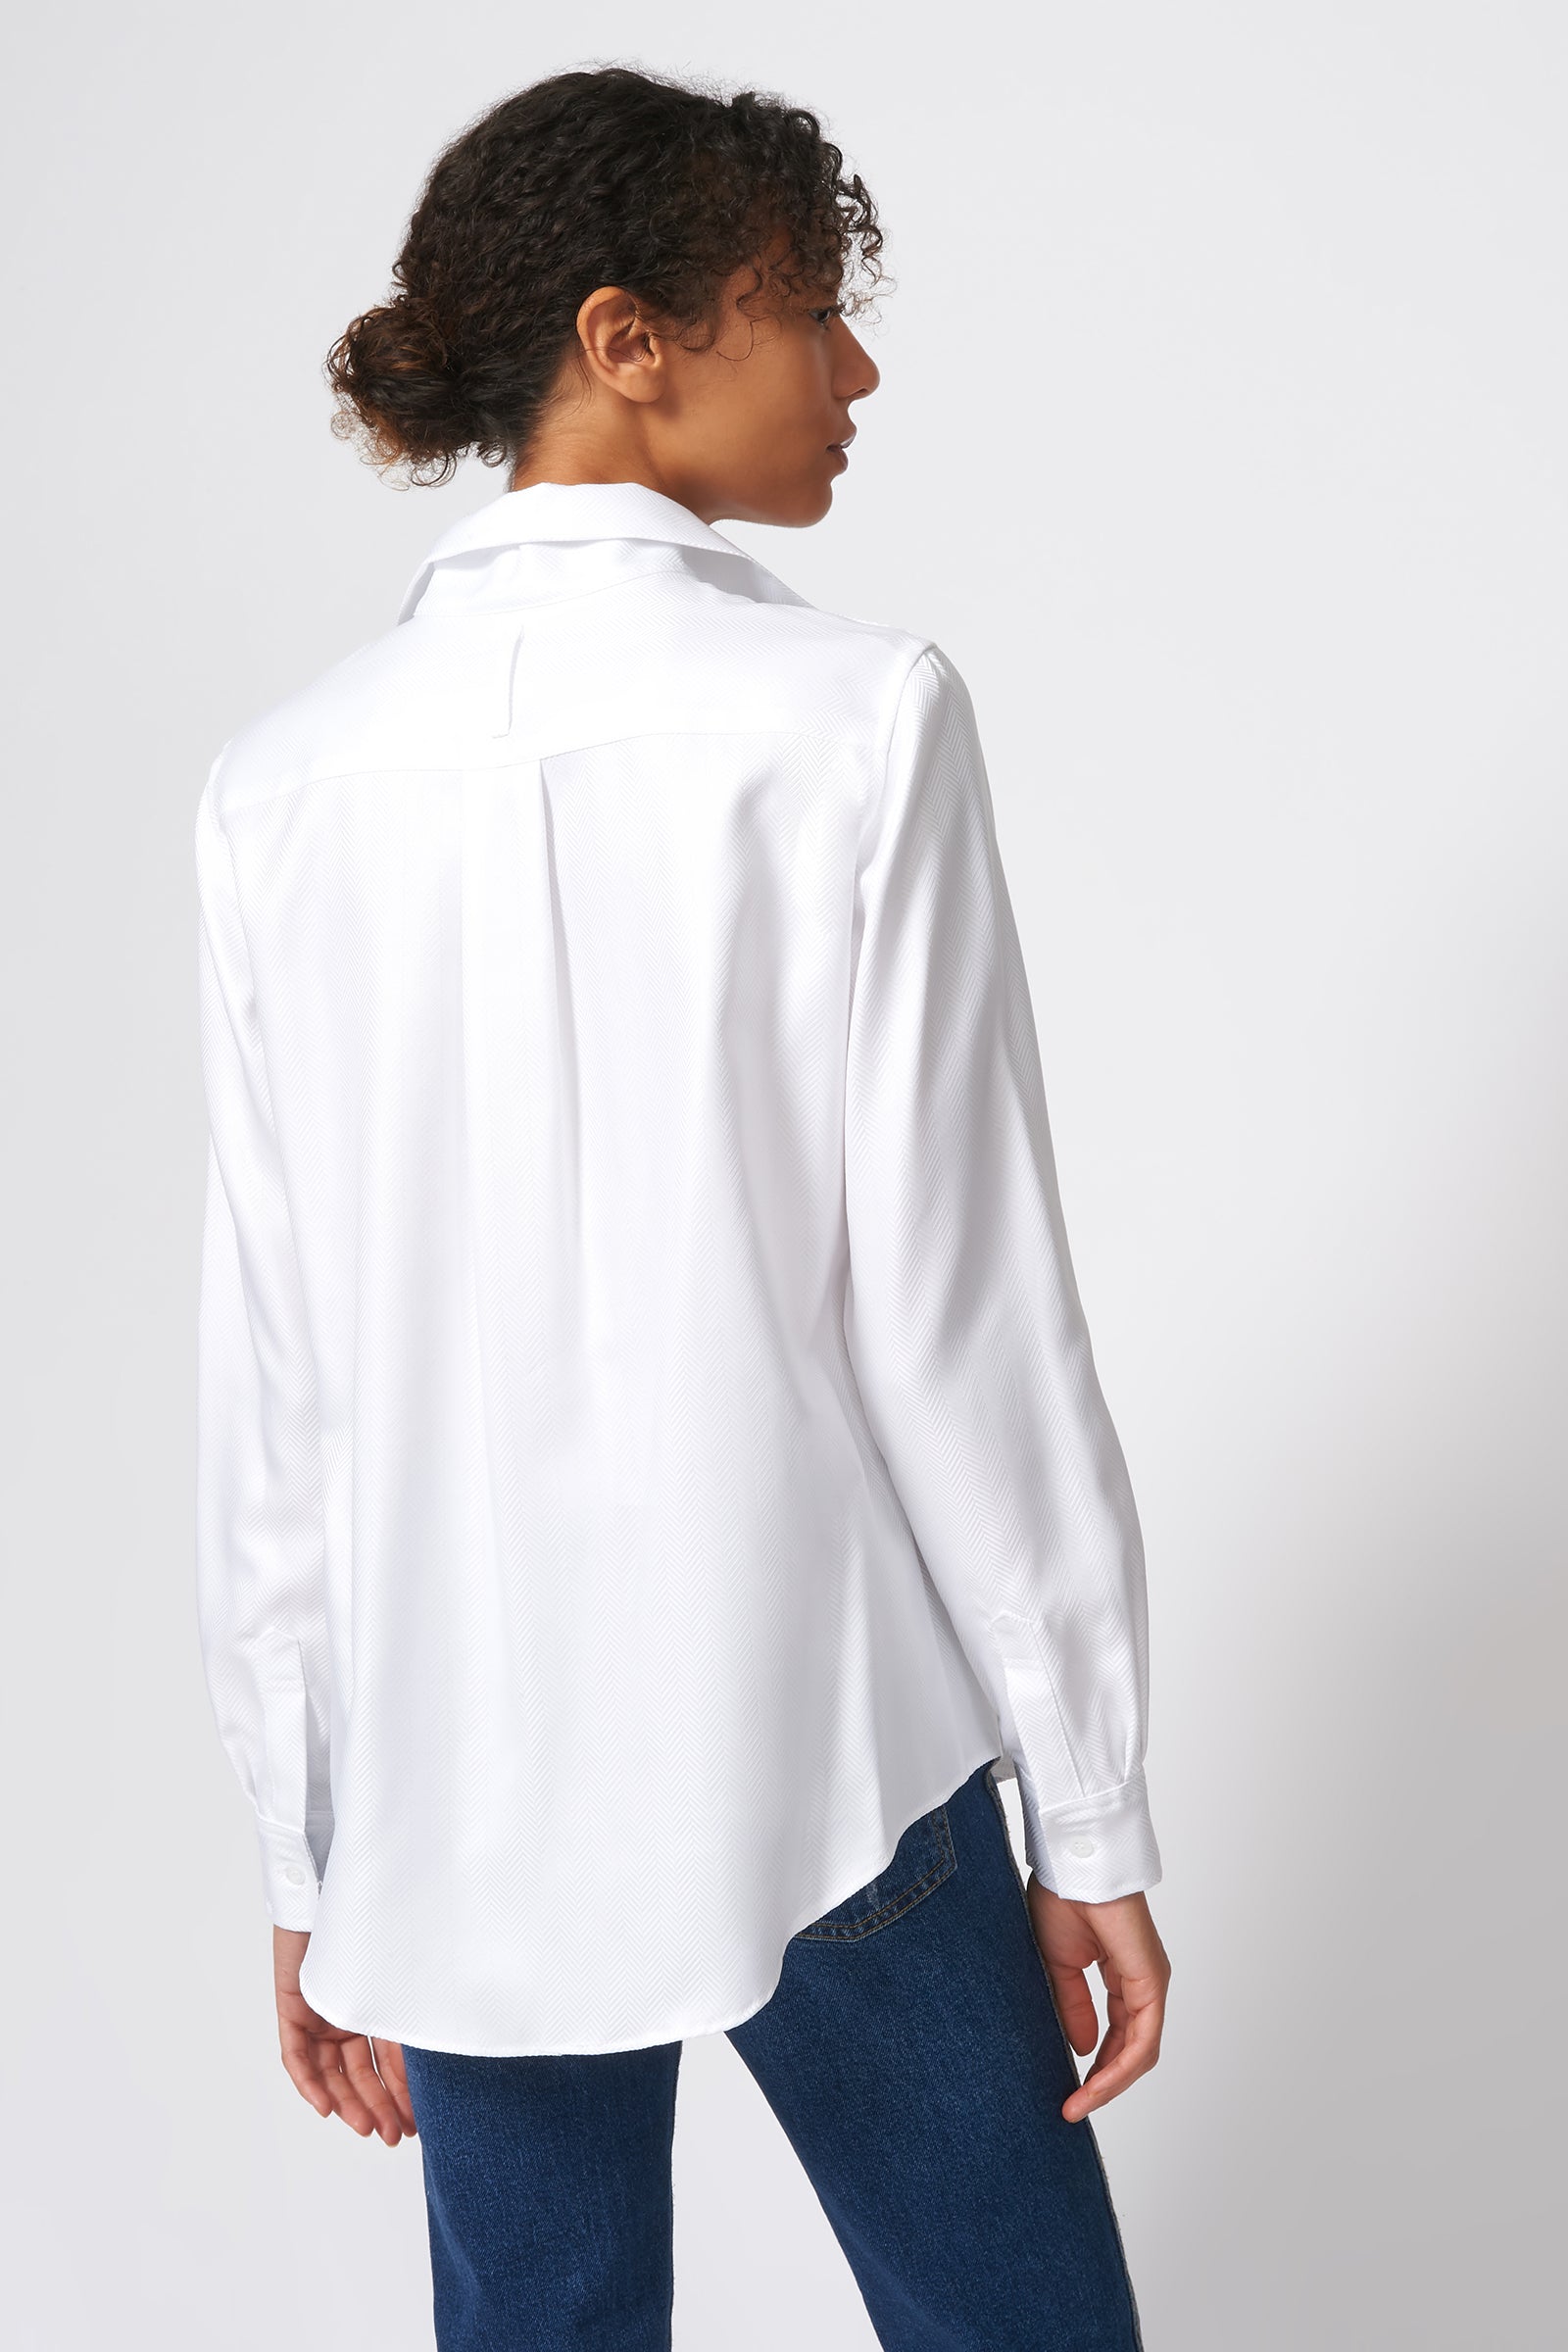 Kal Rieman Ginna Box Pleat Shirt in White Herringbone on Model front view holding collar